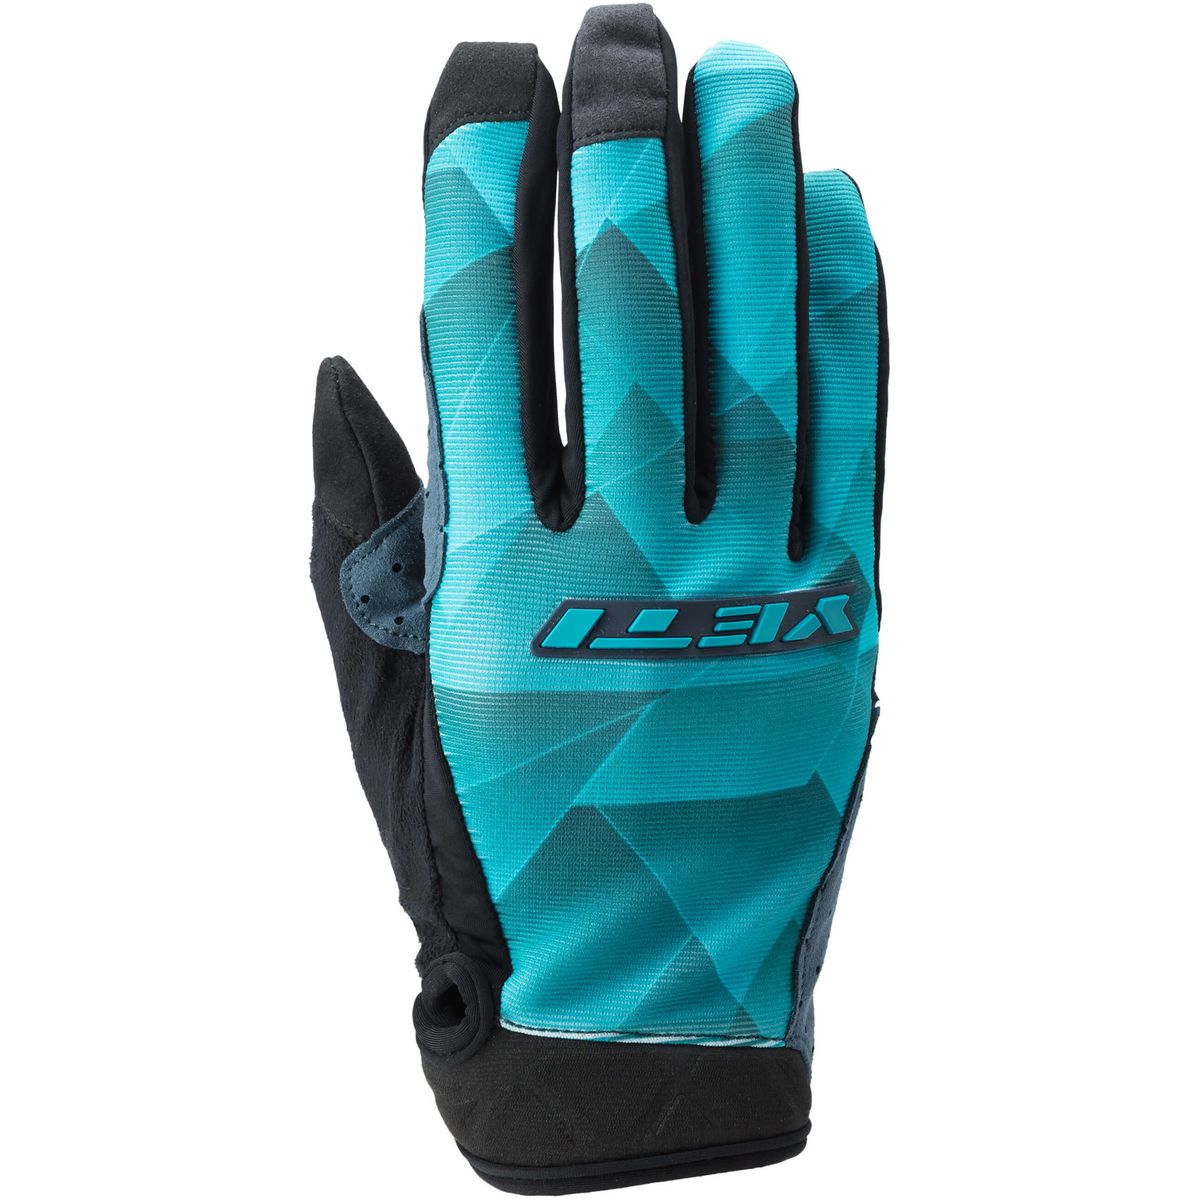 Yeti Cycles Prospect Glove - Men's